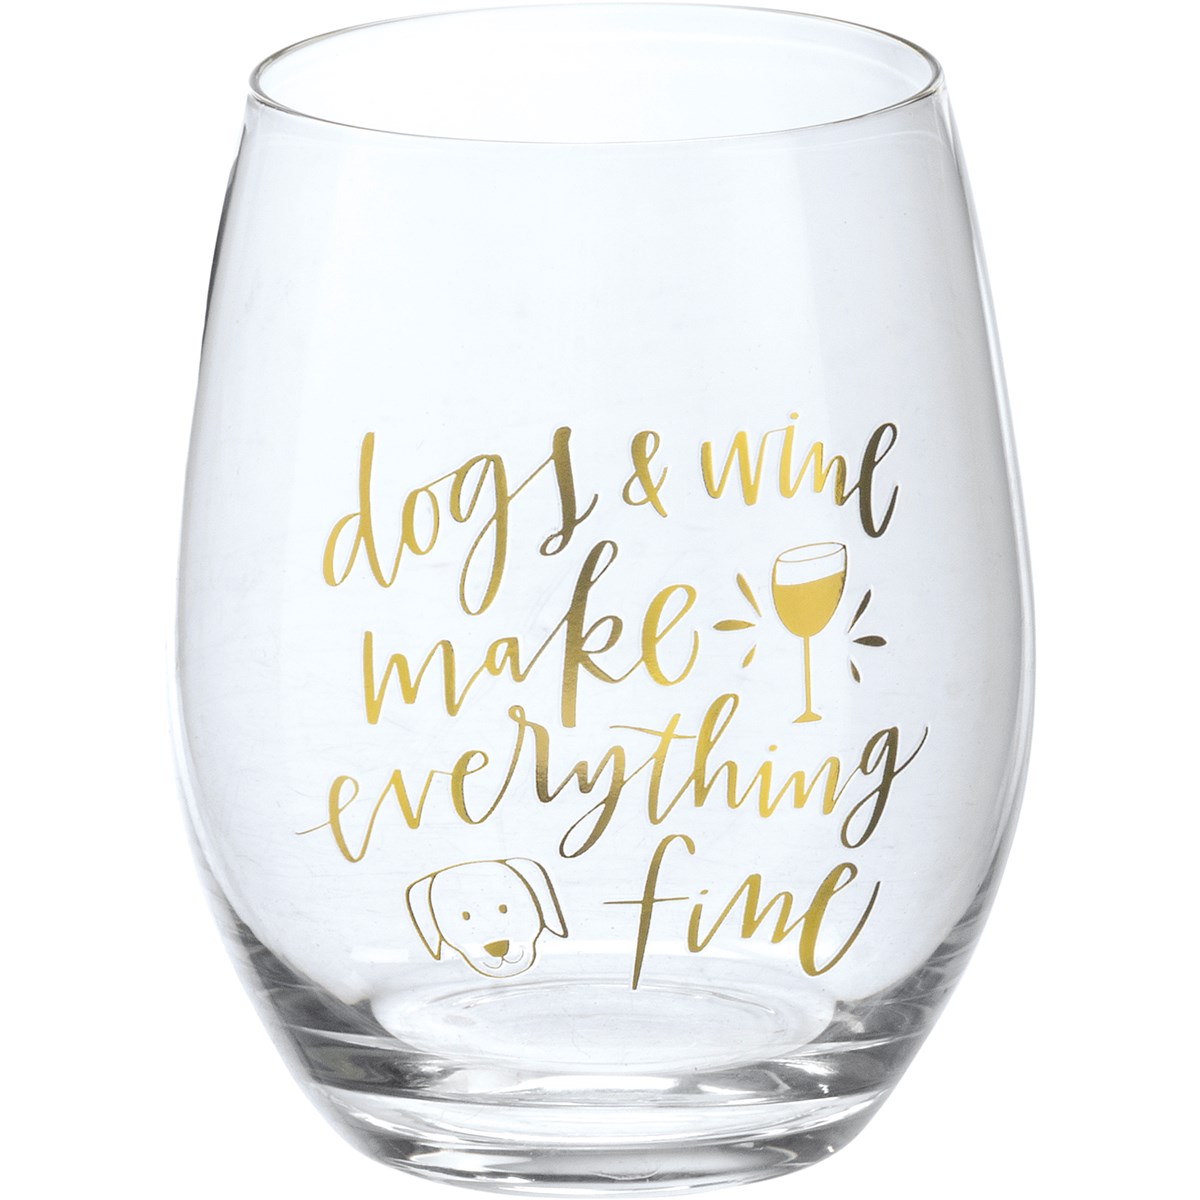 Dogs & Wine Make Everything Fine Wine Glass - Glass